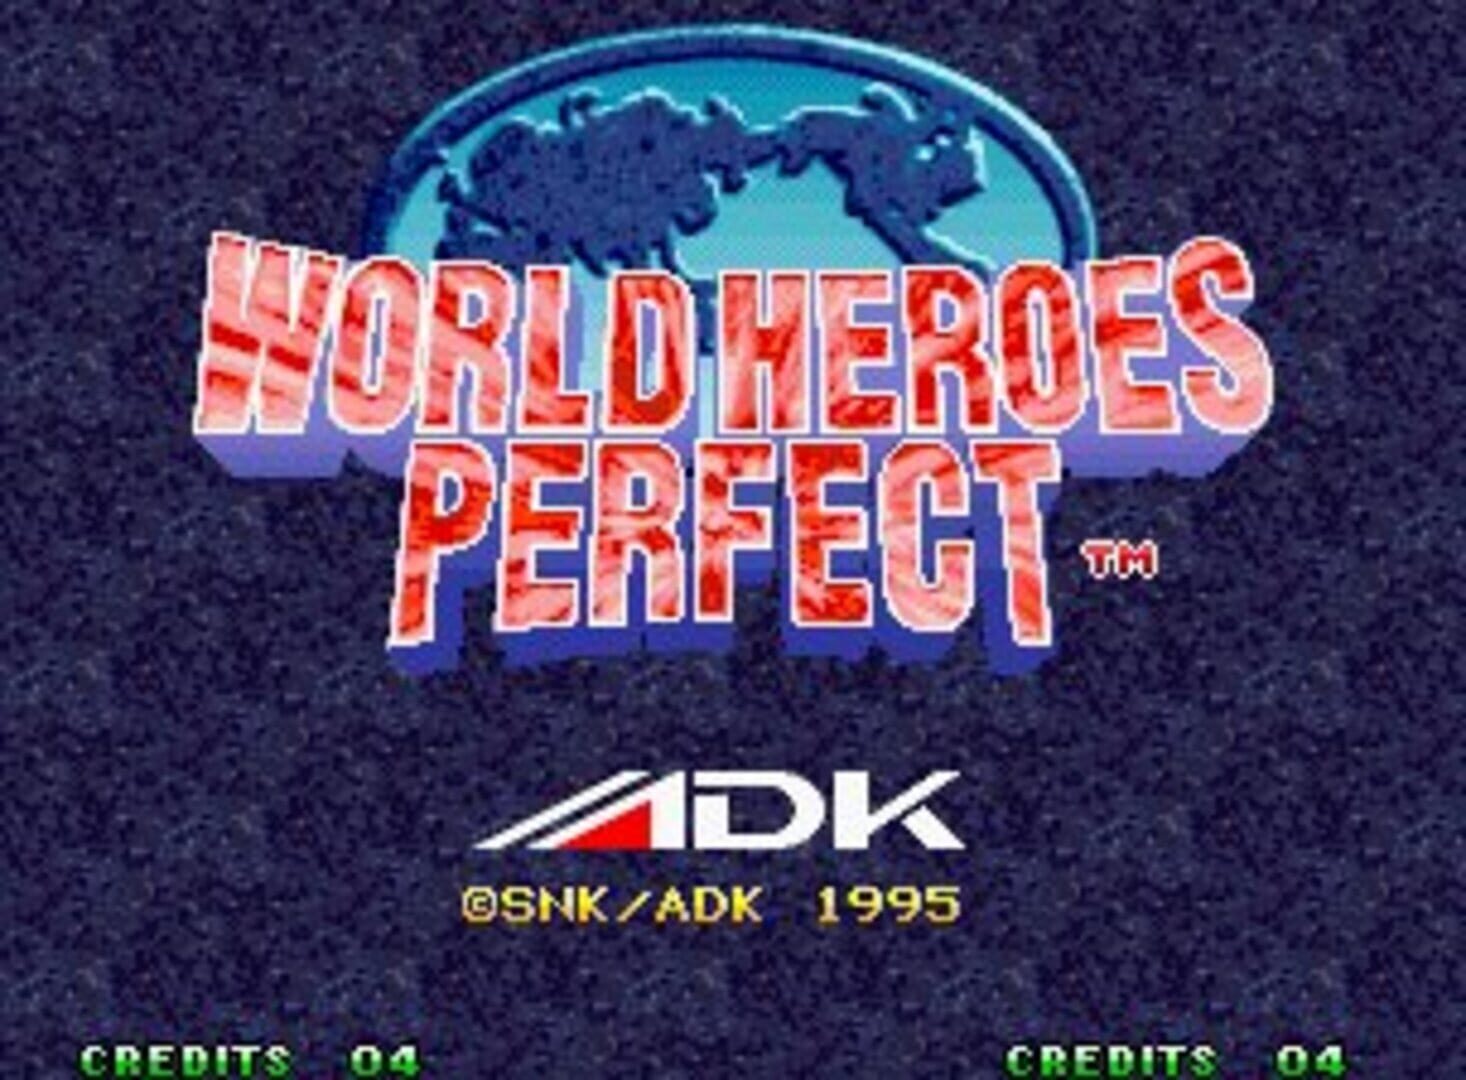 World Heroes Perfect screenshot